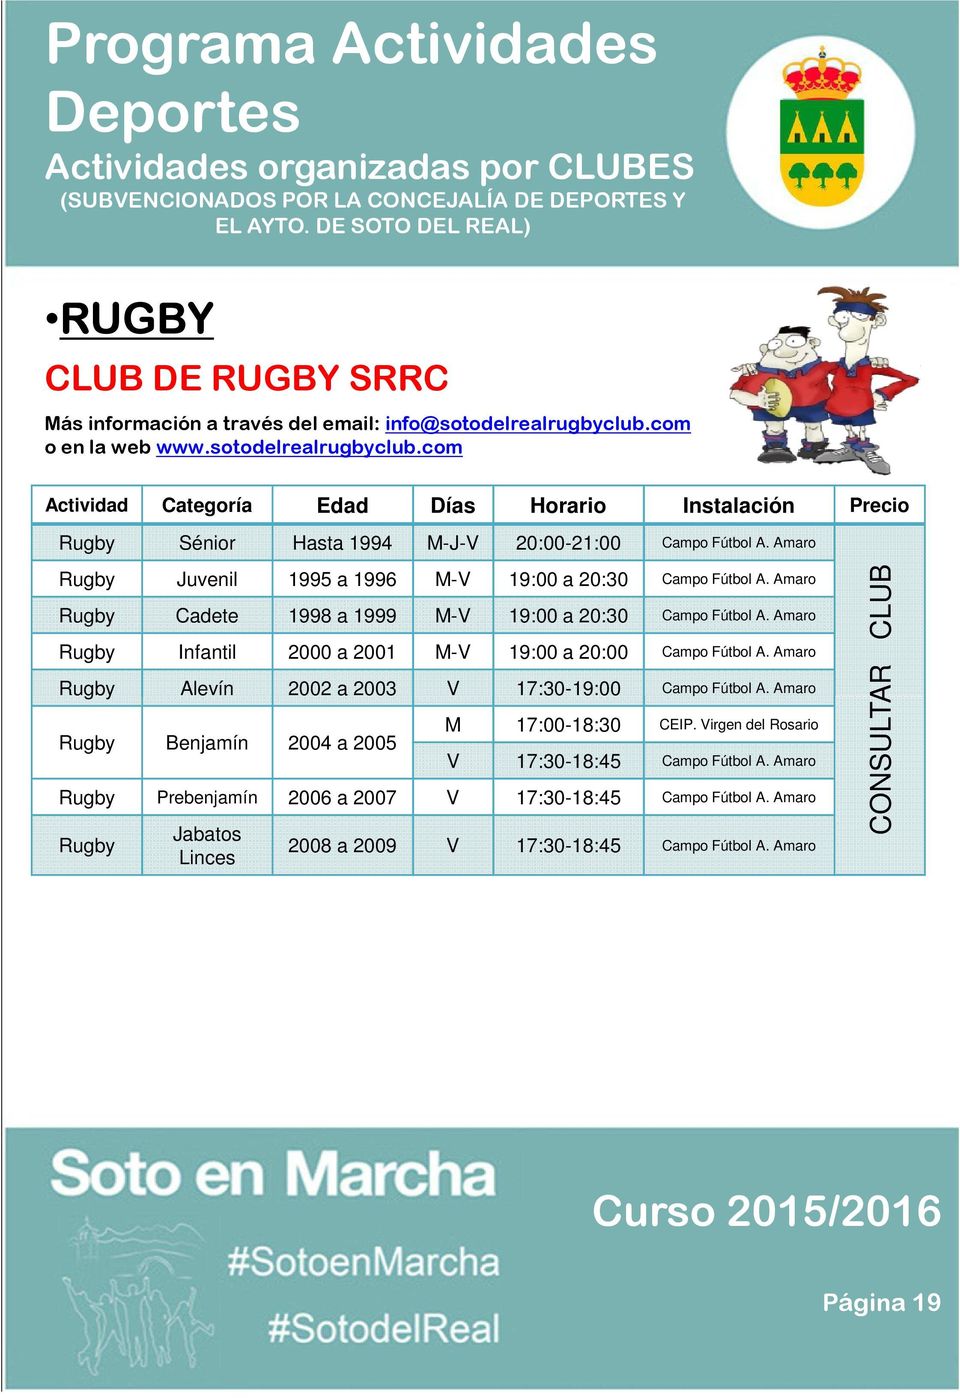 Amaro Rugby Juvenil 1995 a 1996 M-V 19:00 a 20:30 Campo Fútbol A. Amaro Rugby Cadete 1998 a 1999 M-V 19:00 a 20:30 Campo Fútbol A.